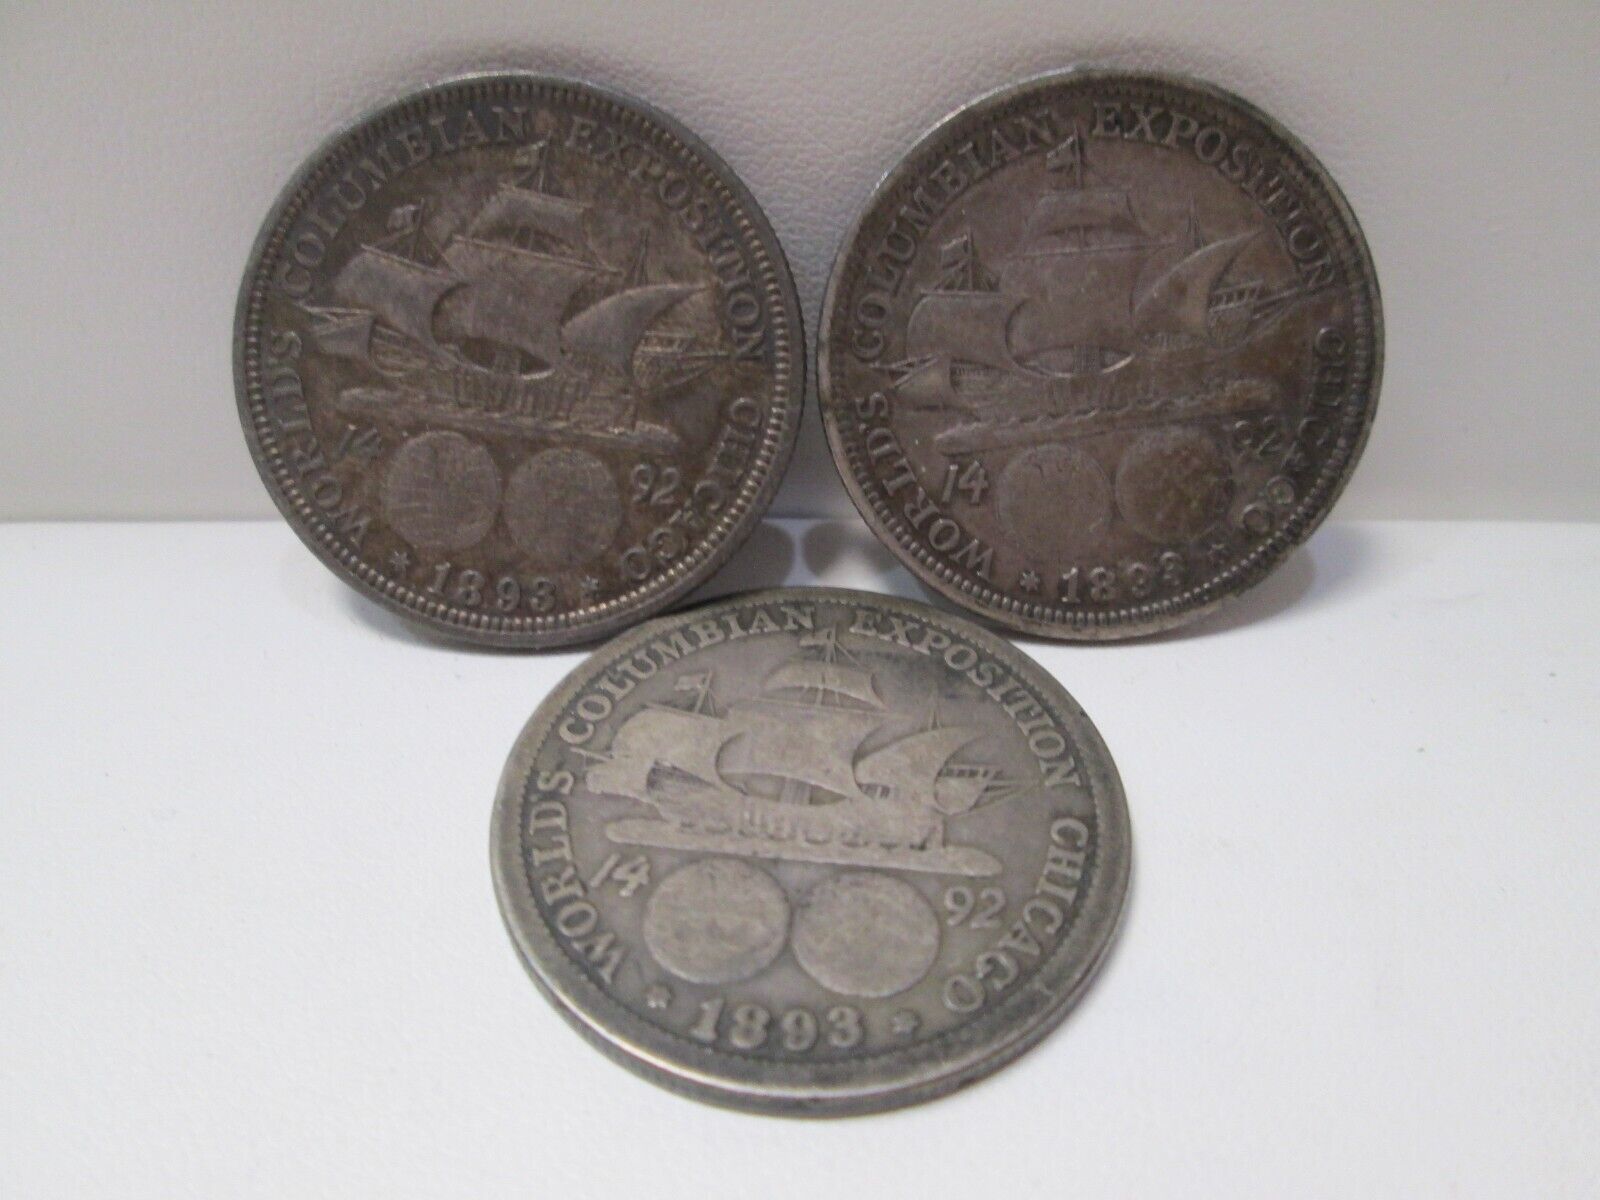 Lot of 3 1893 US Columbus Silver Half Dollar Commemorative Coins